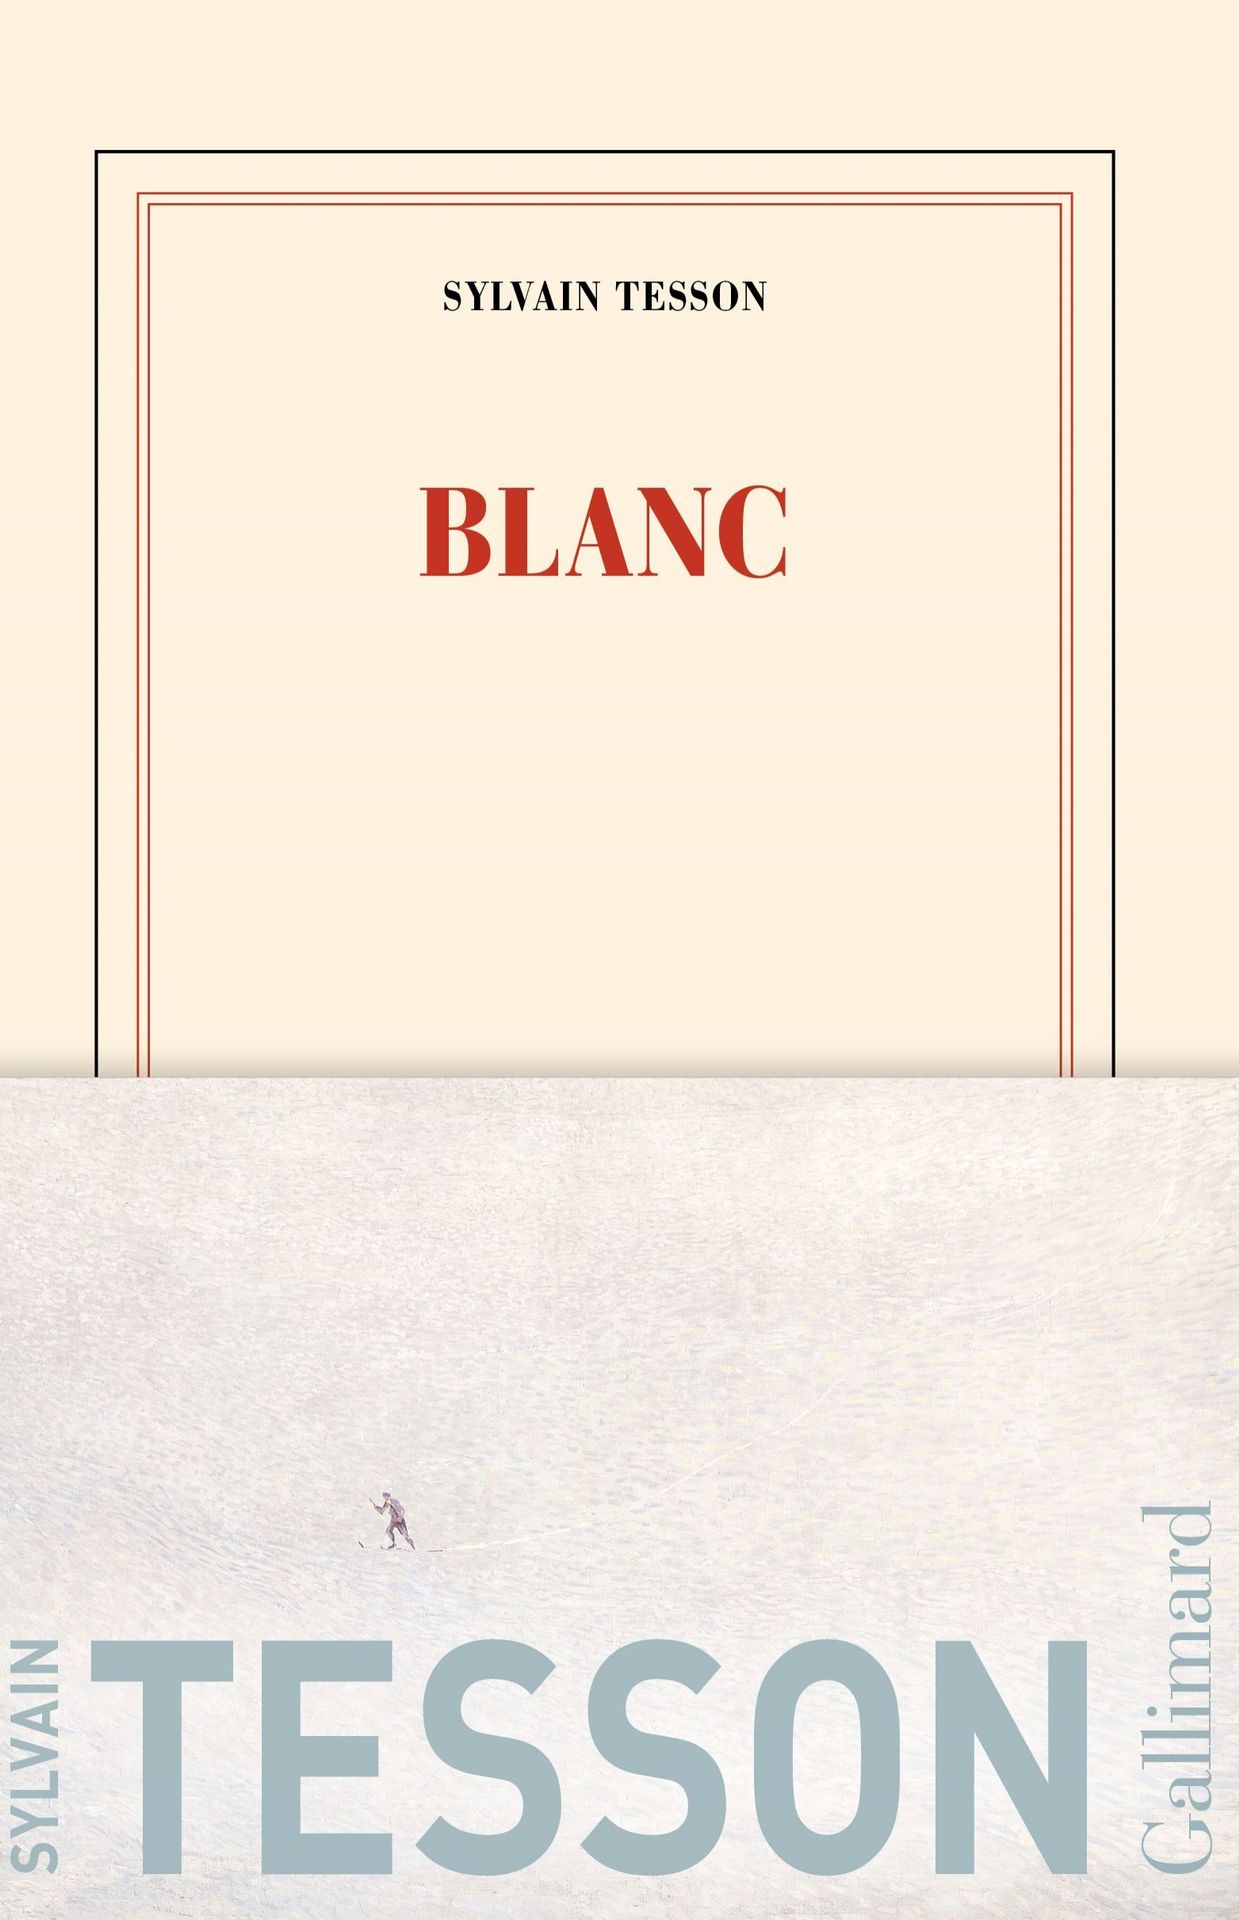 "Blanc" Sylvain Tesson - Ed. Gallimard 